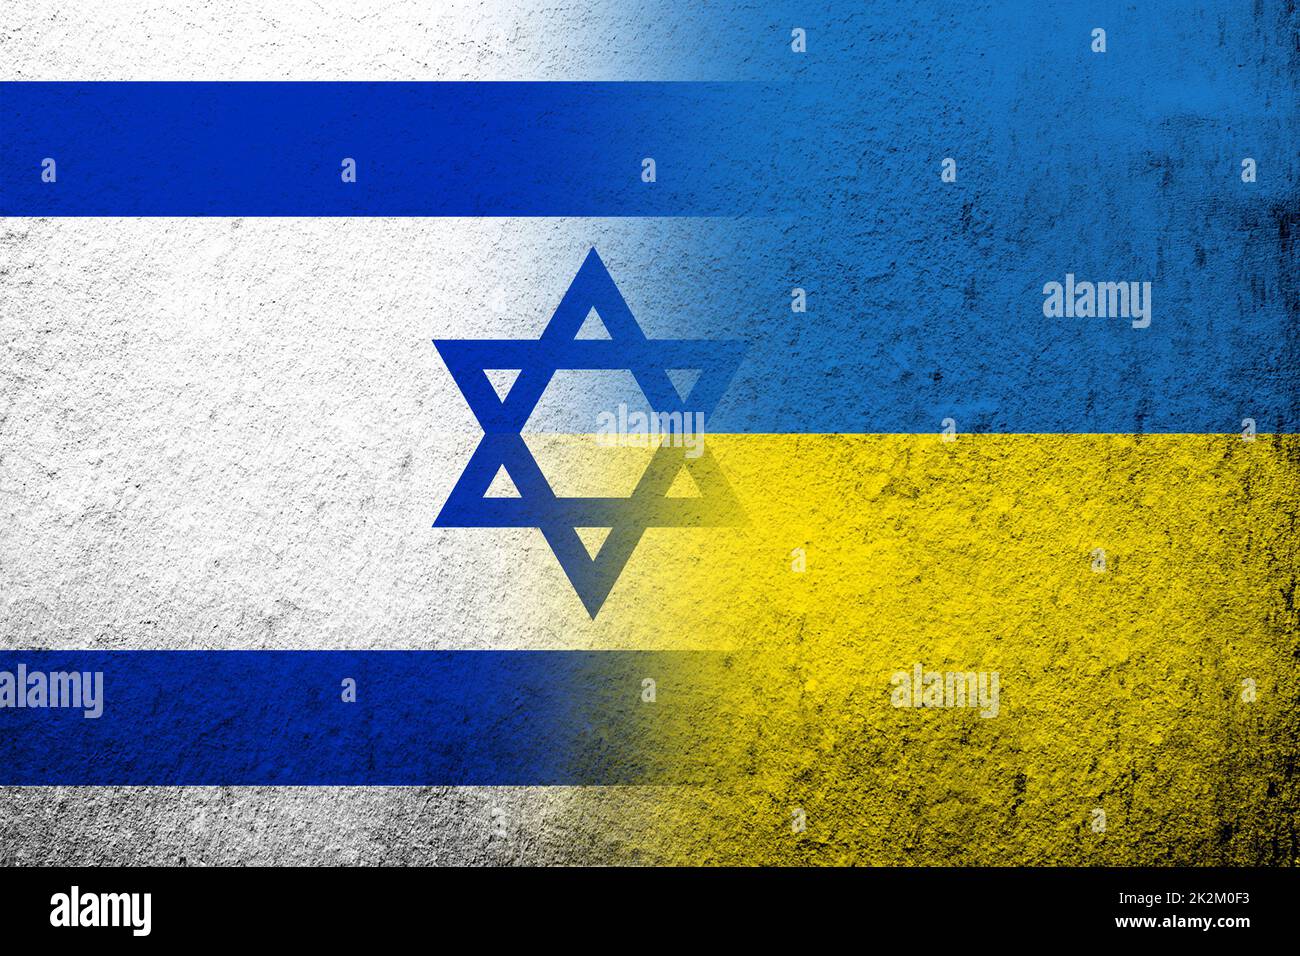 State of Israel National flag with National flag of Ukraine. Grunge background Stock Photo